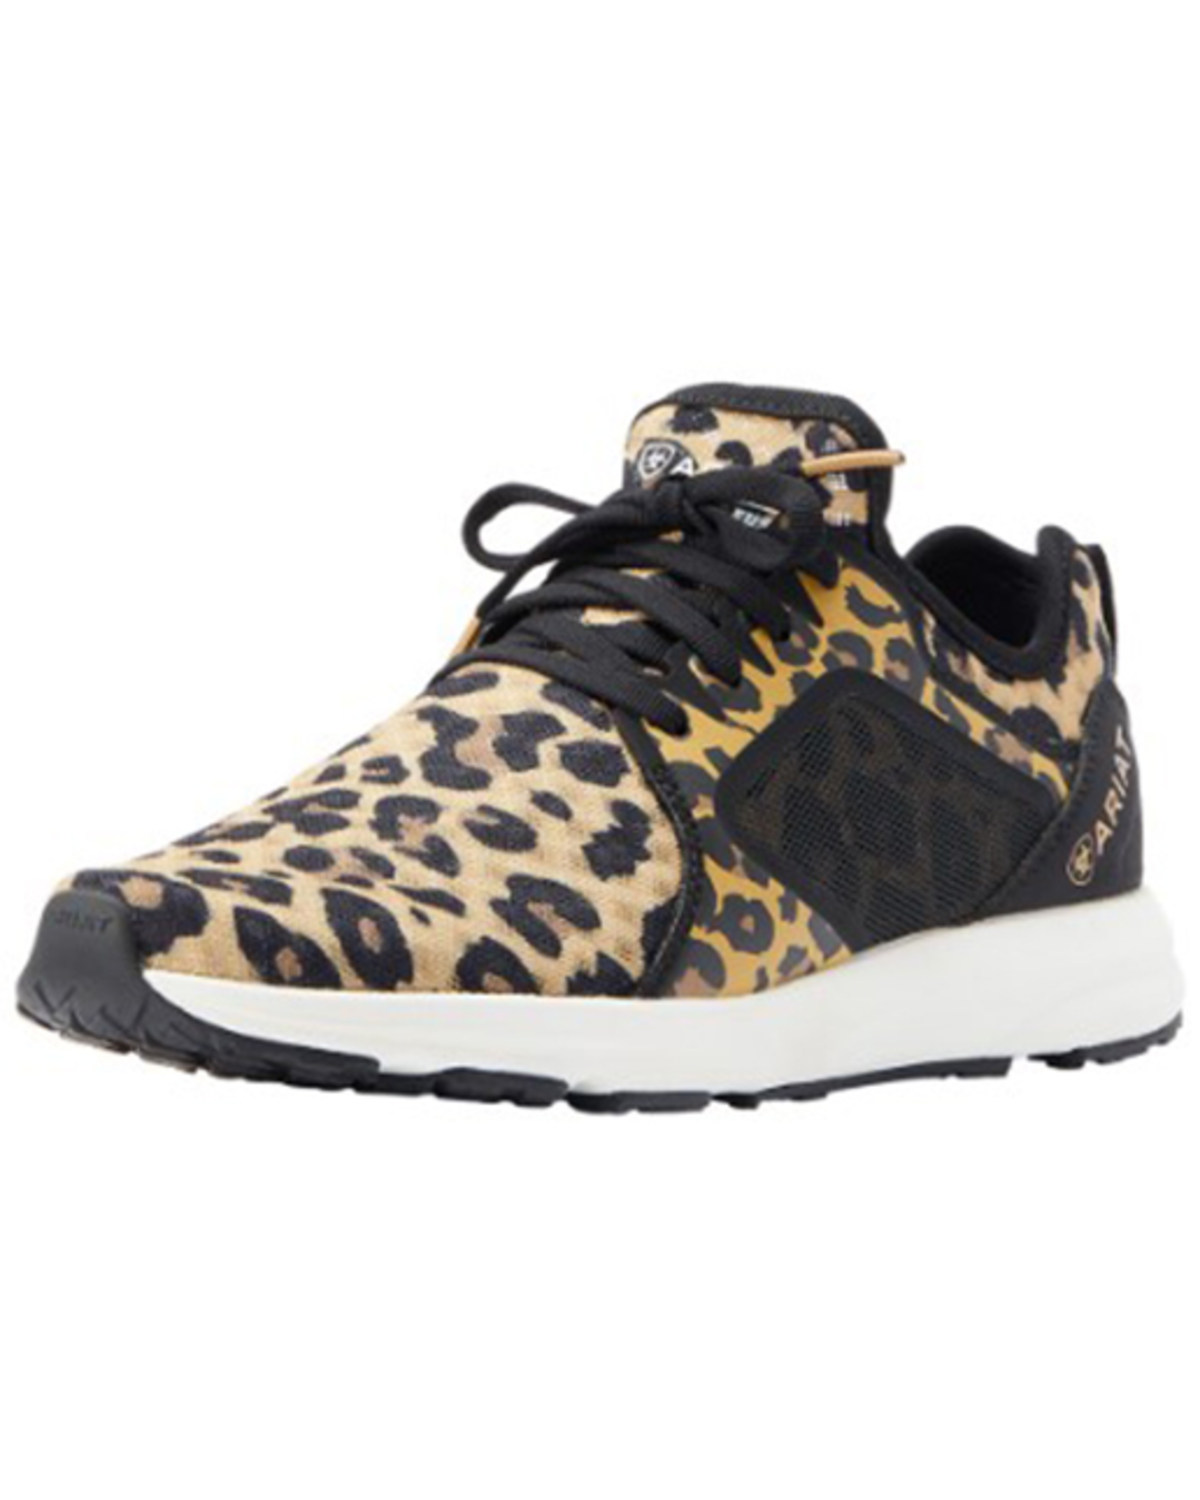 Ariat Women's Leopard Print Fuse Sneakers